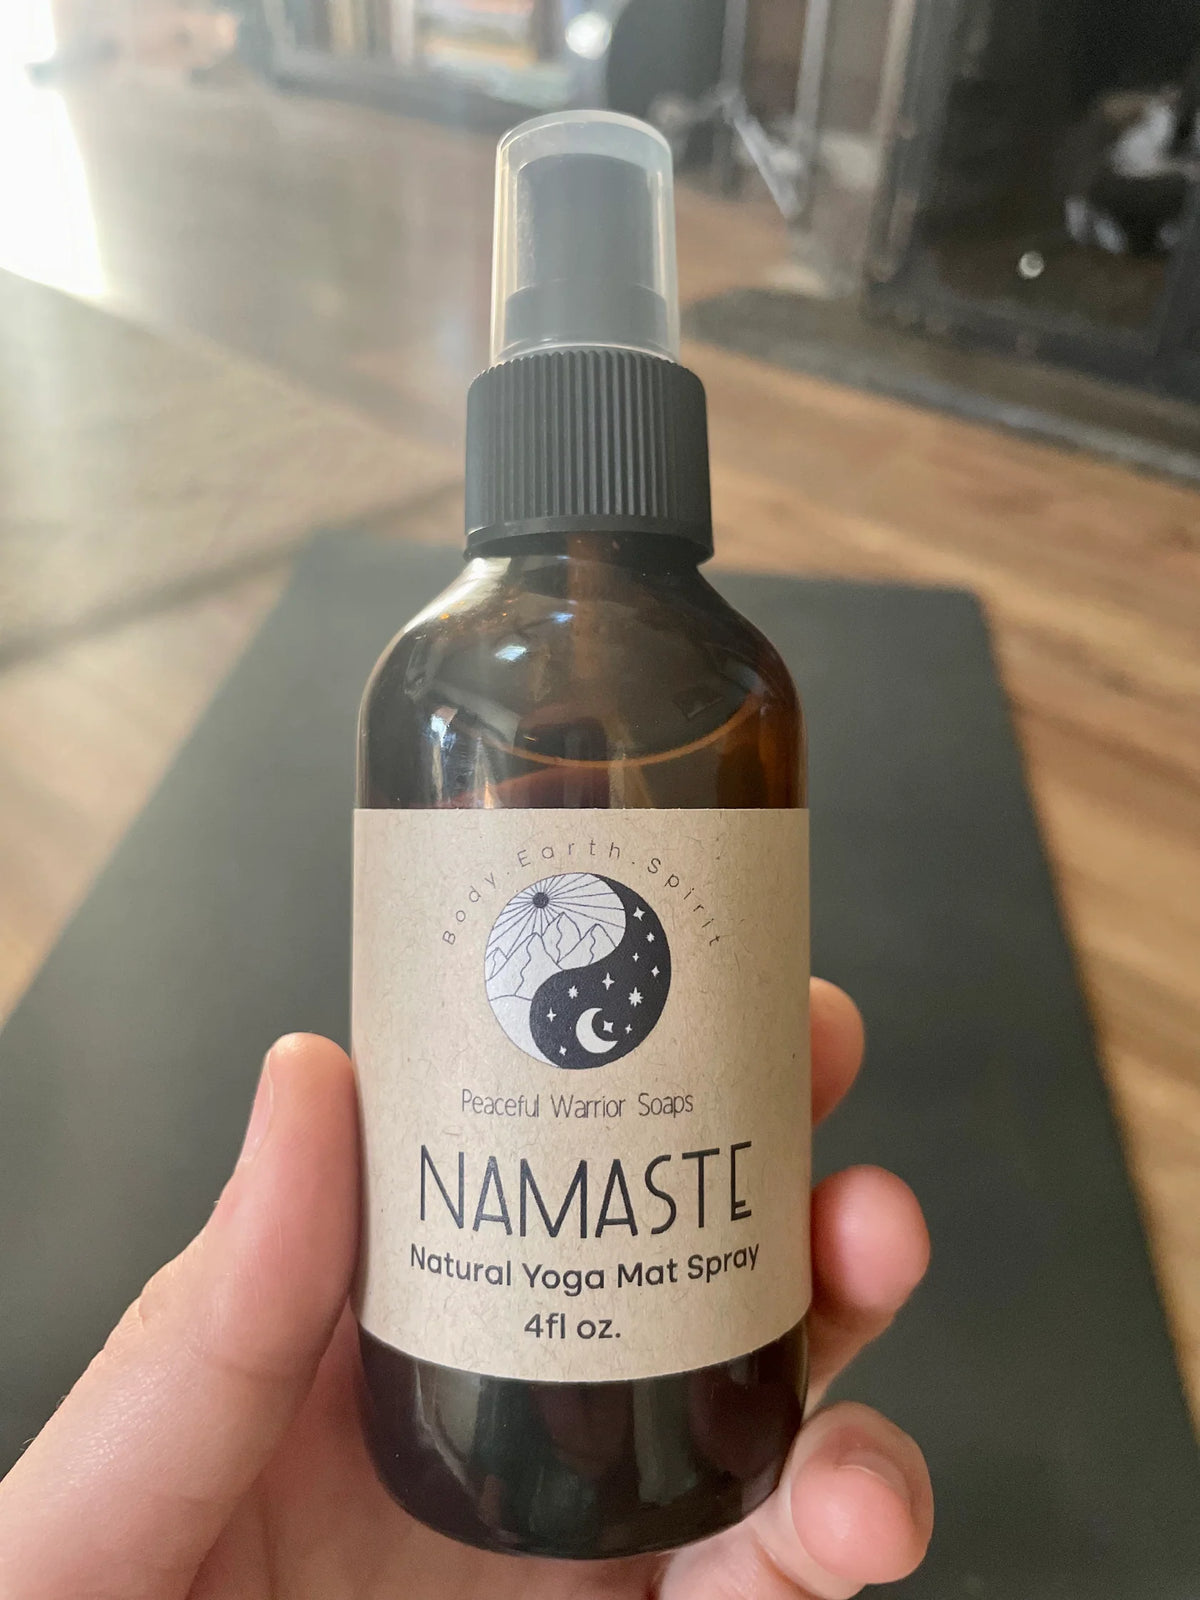 Namaste Yoga Mat Spray